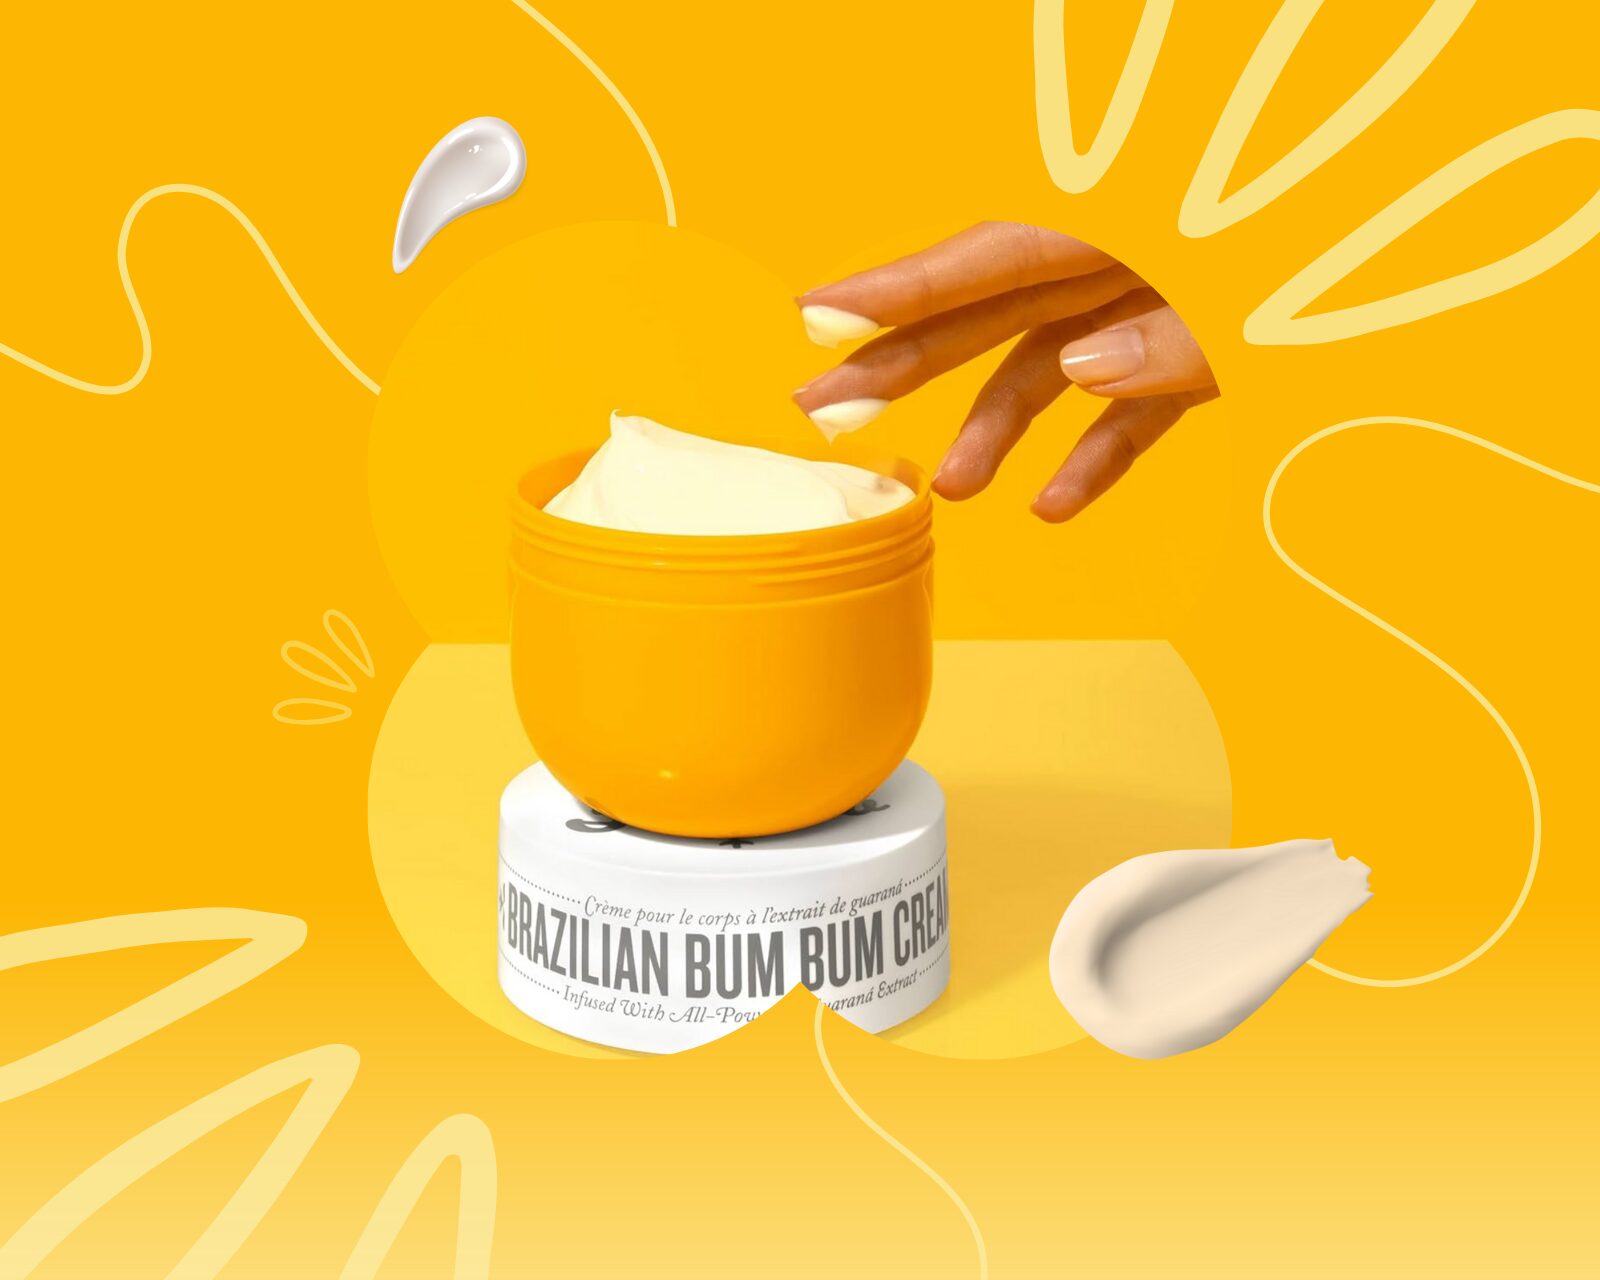 brazilian bum bum cream